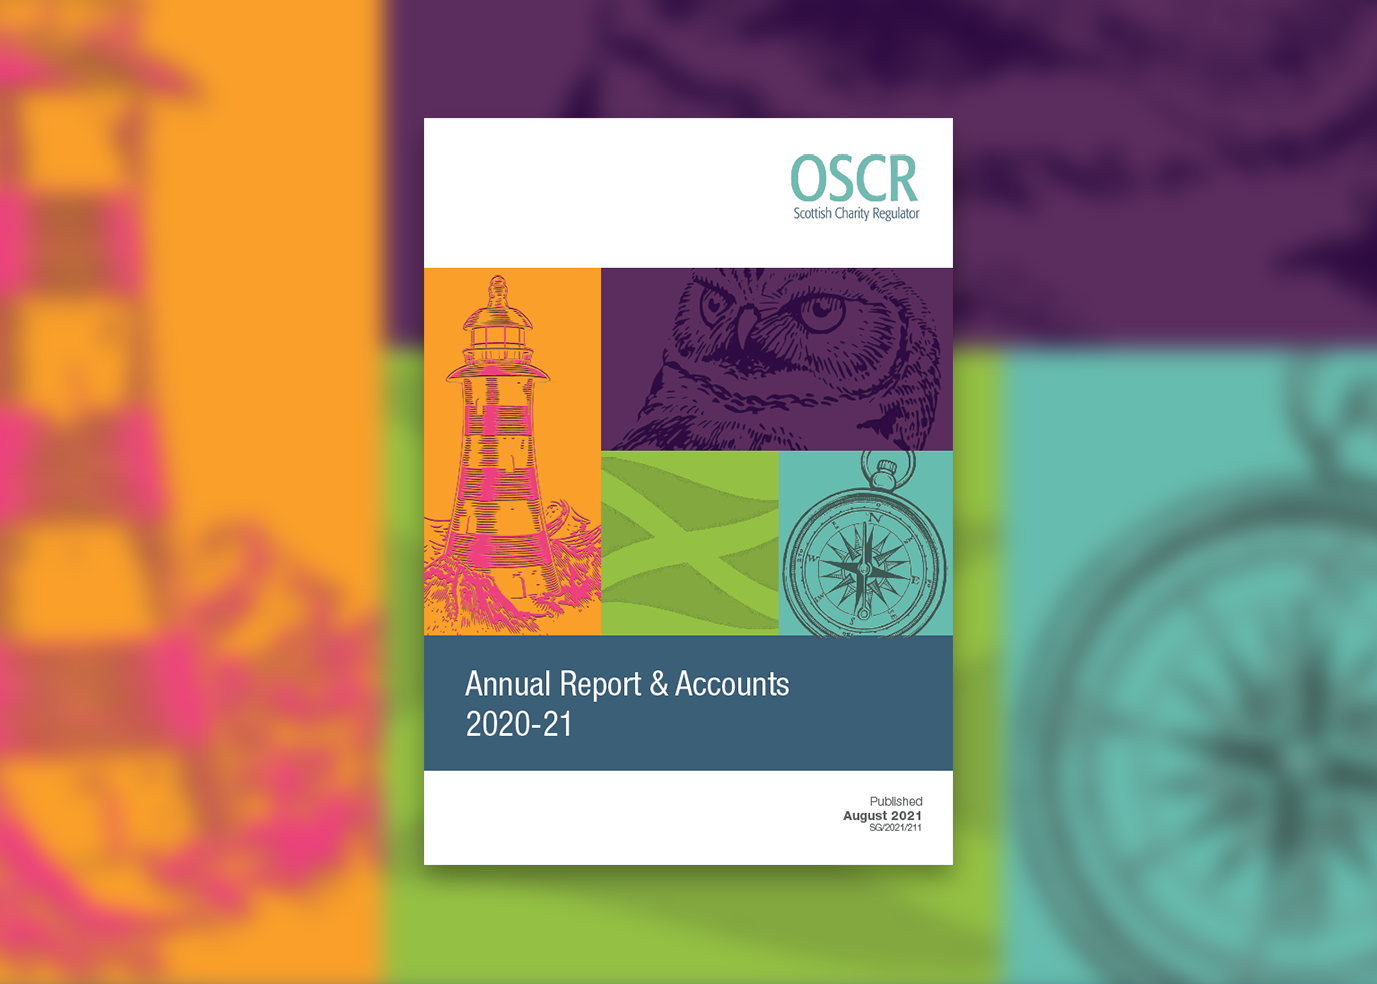 OSCR's Annual Report & Accounts